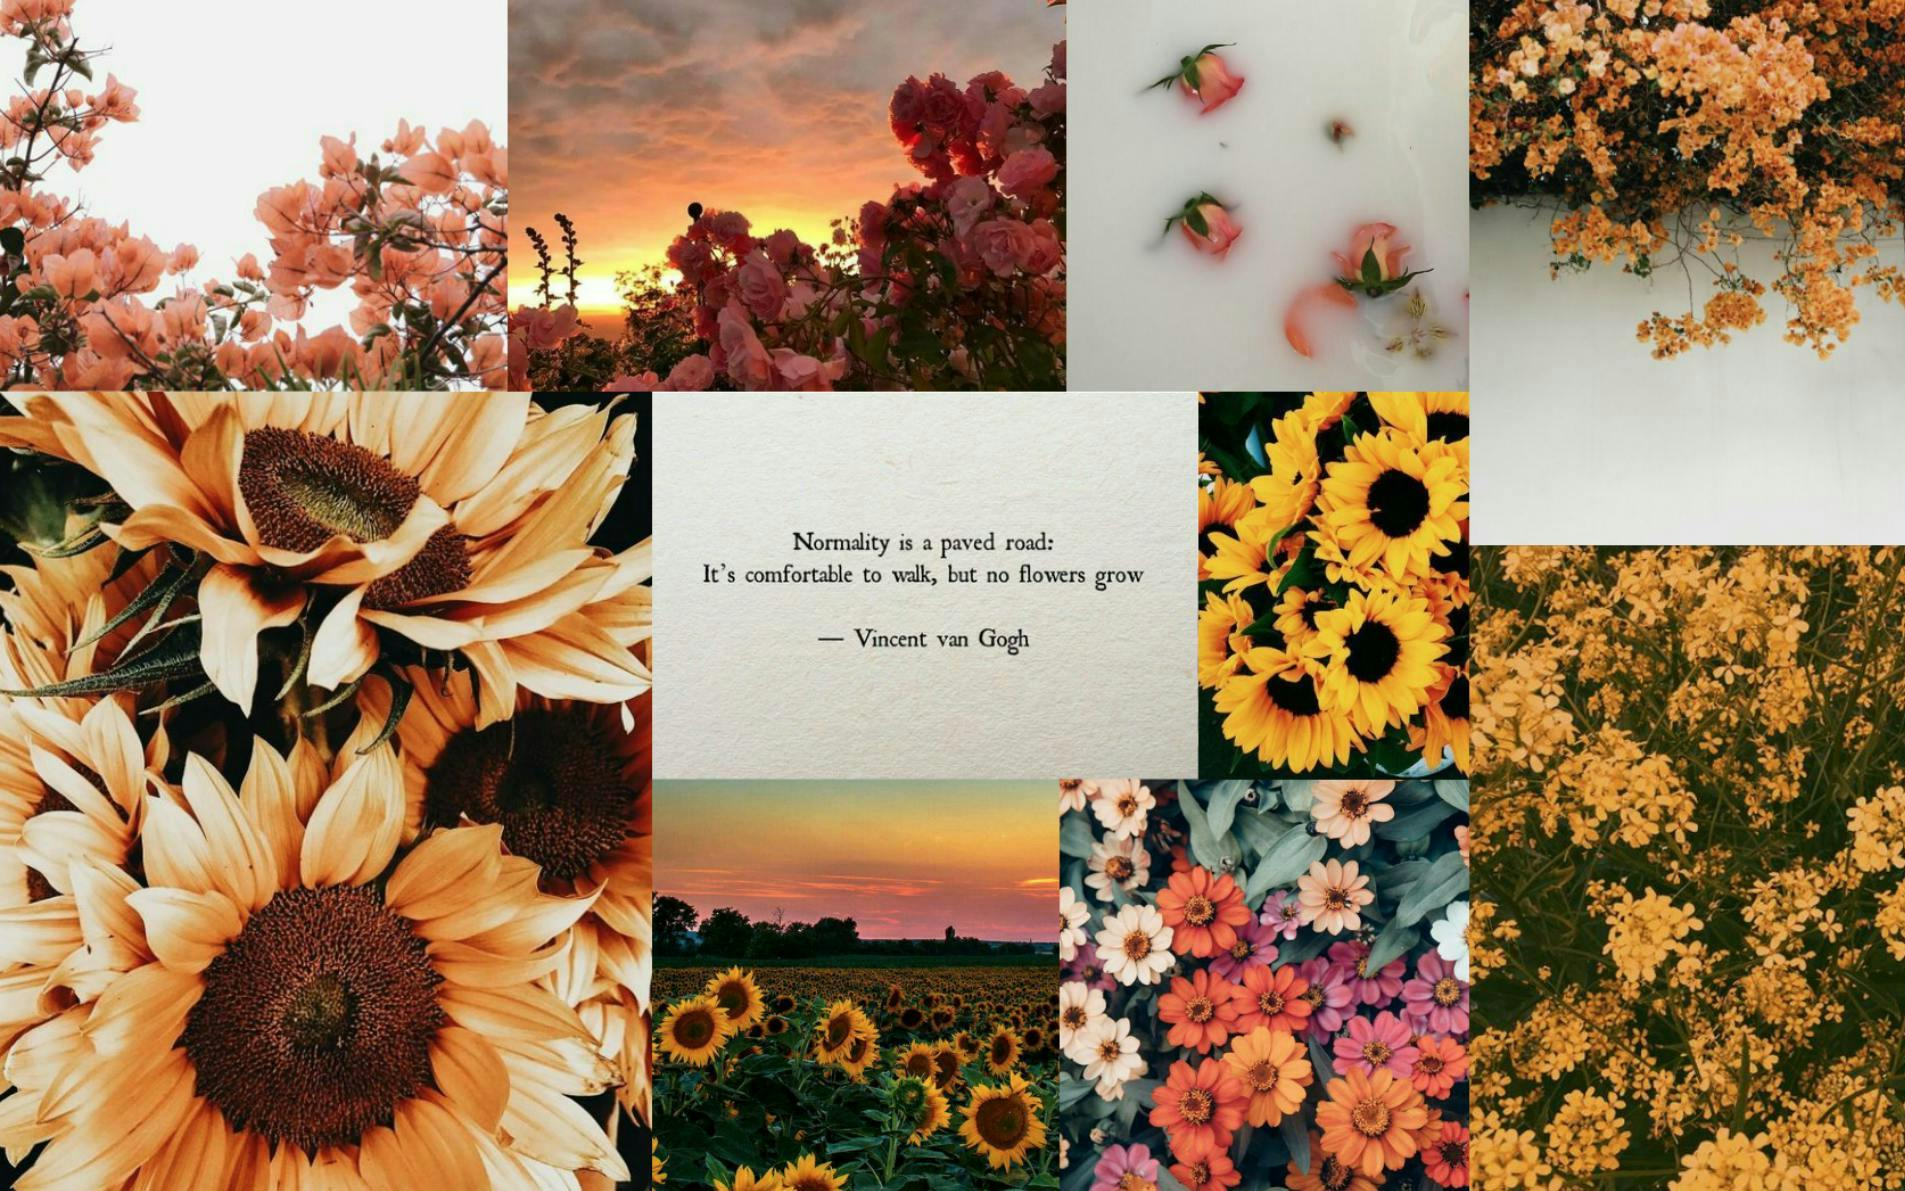 art collage daisy flower plant petal business card text sunflower outdoors